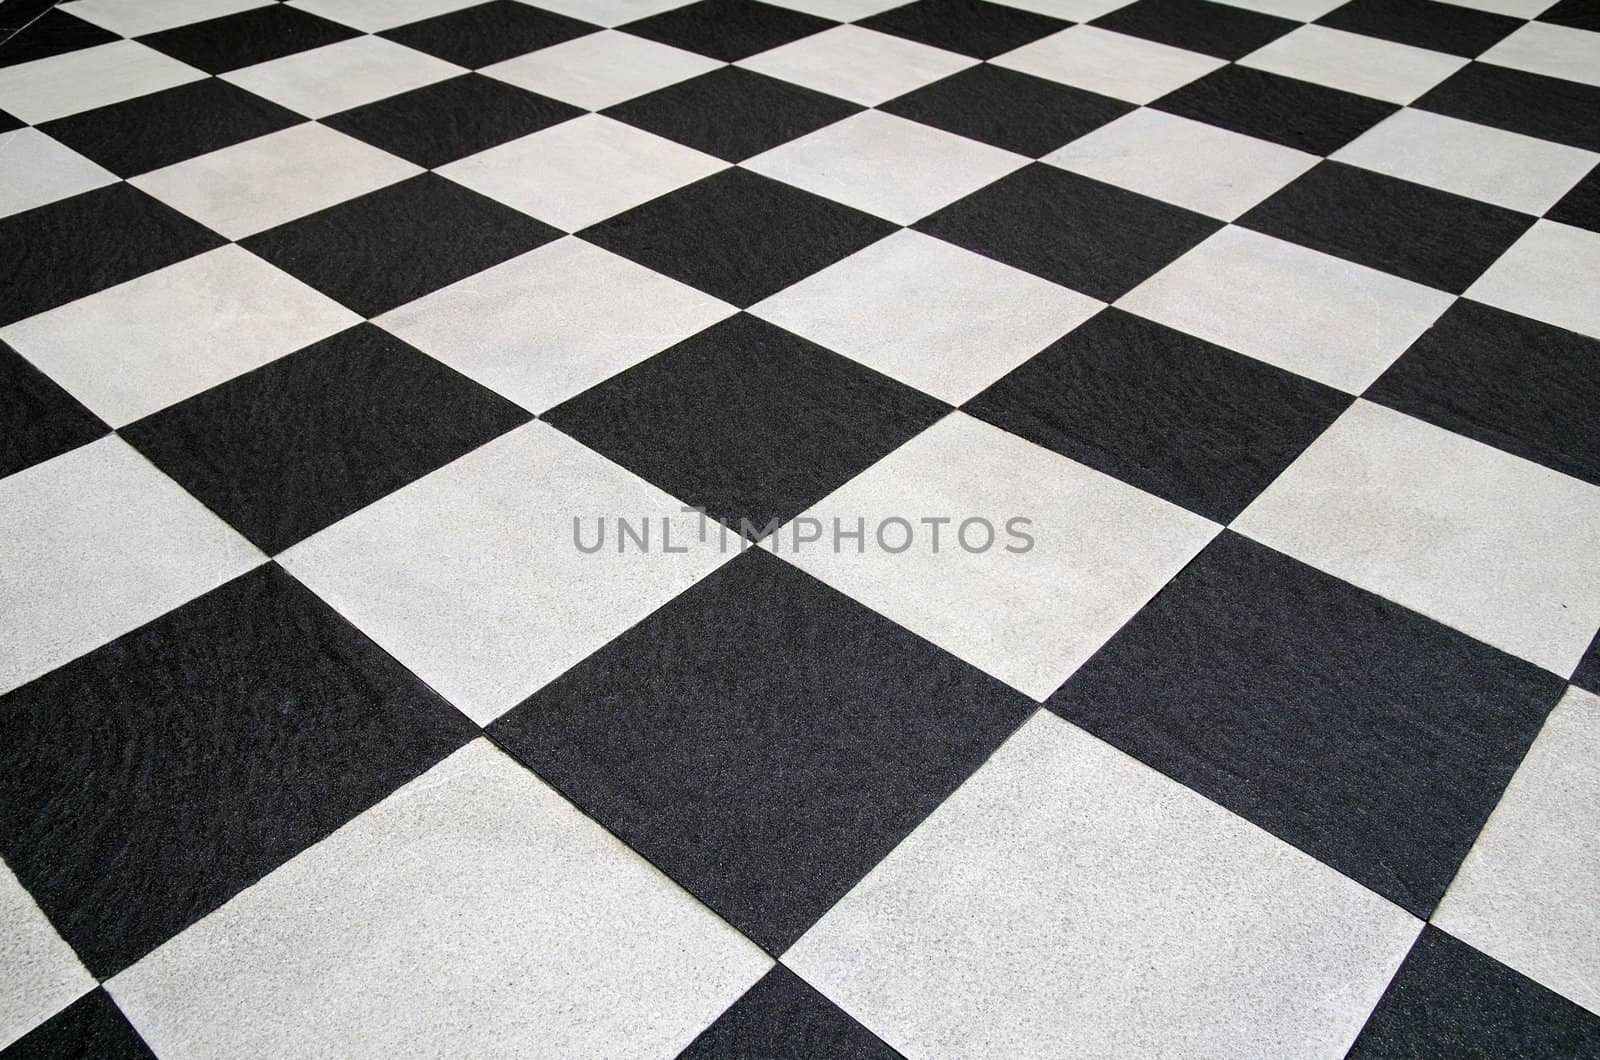  Square black and white tiles floor by BeeManGuitarRa